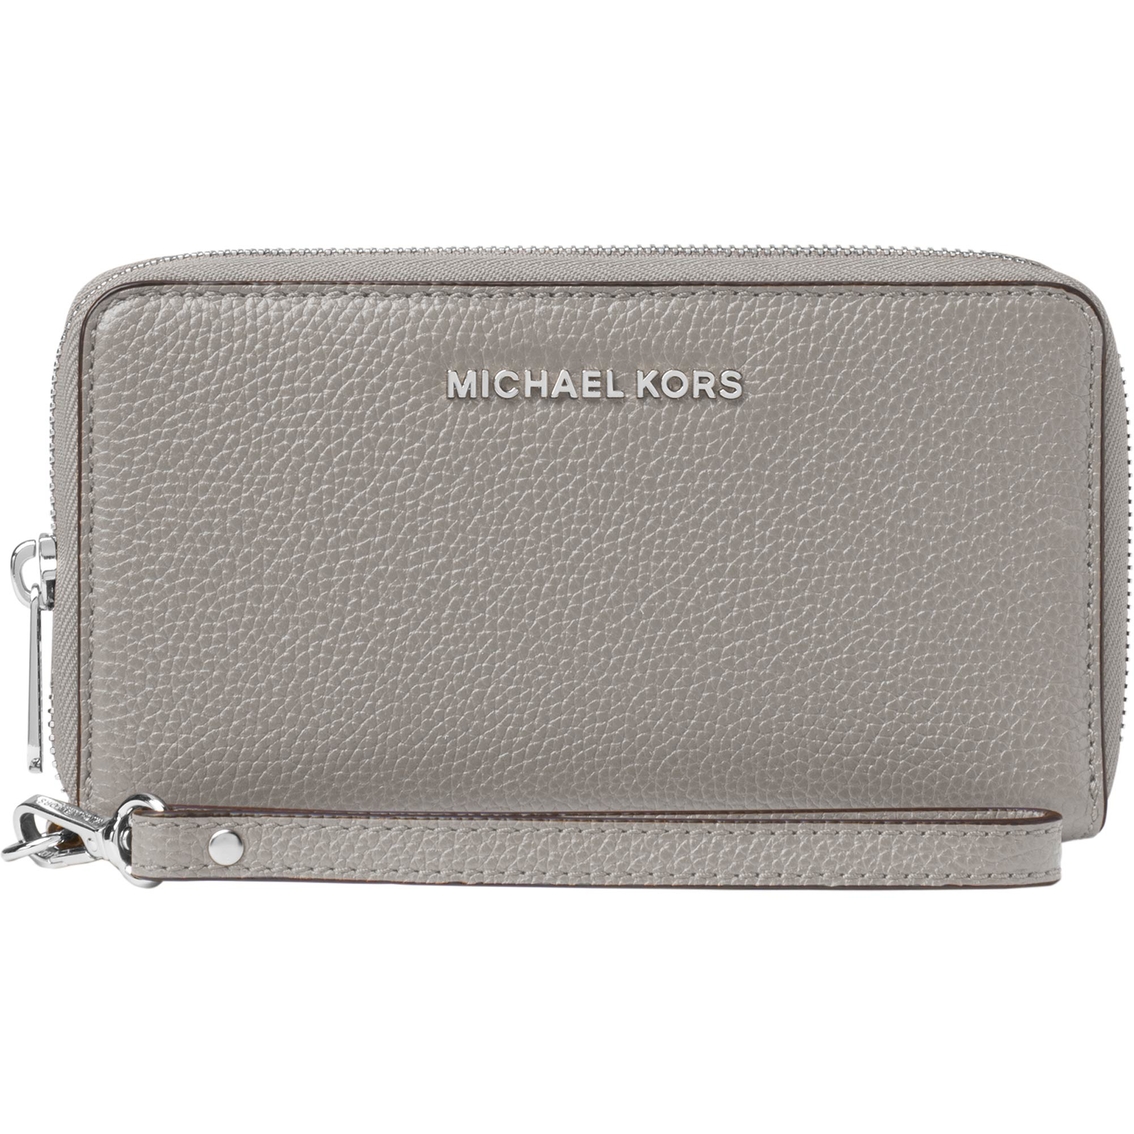 Michael Kors Large Leather Smartphone 